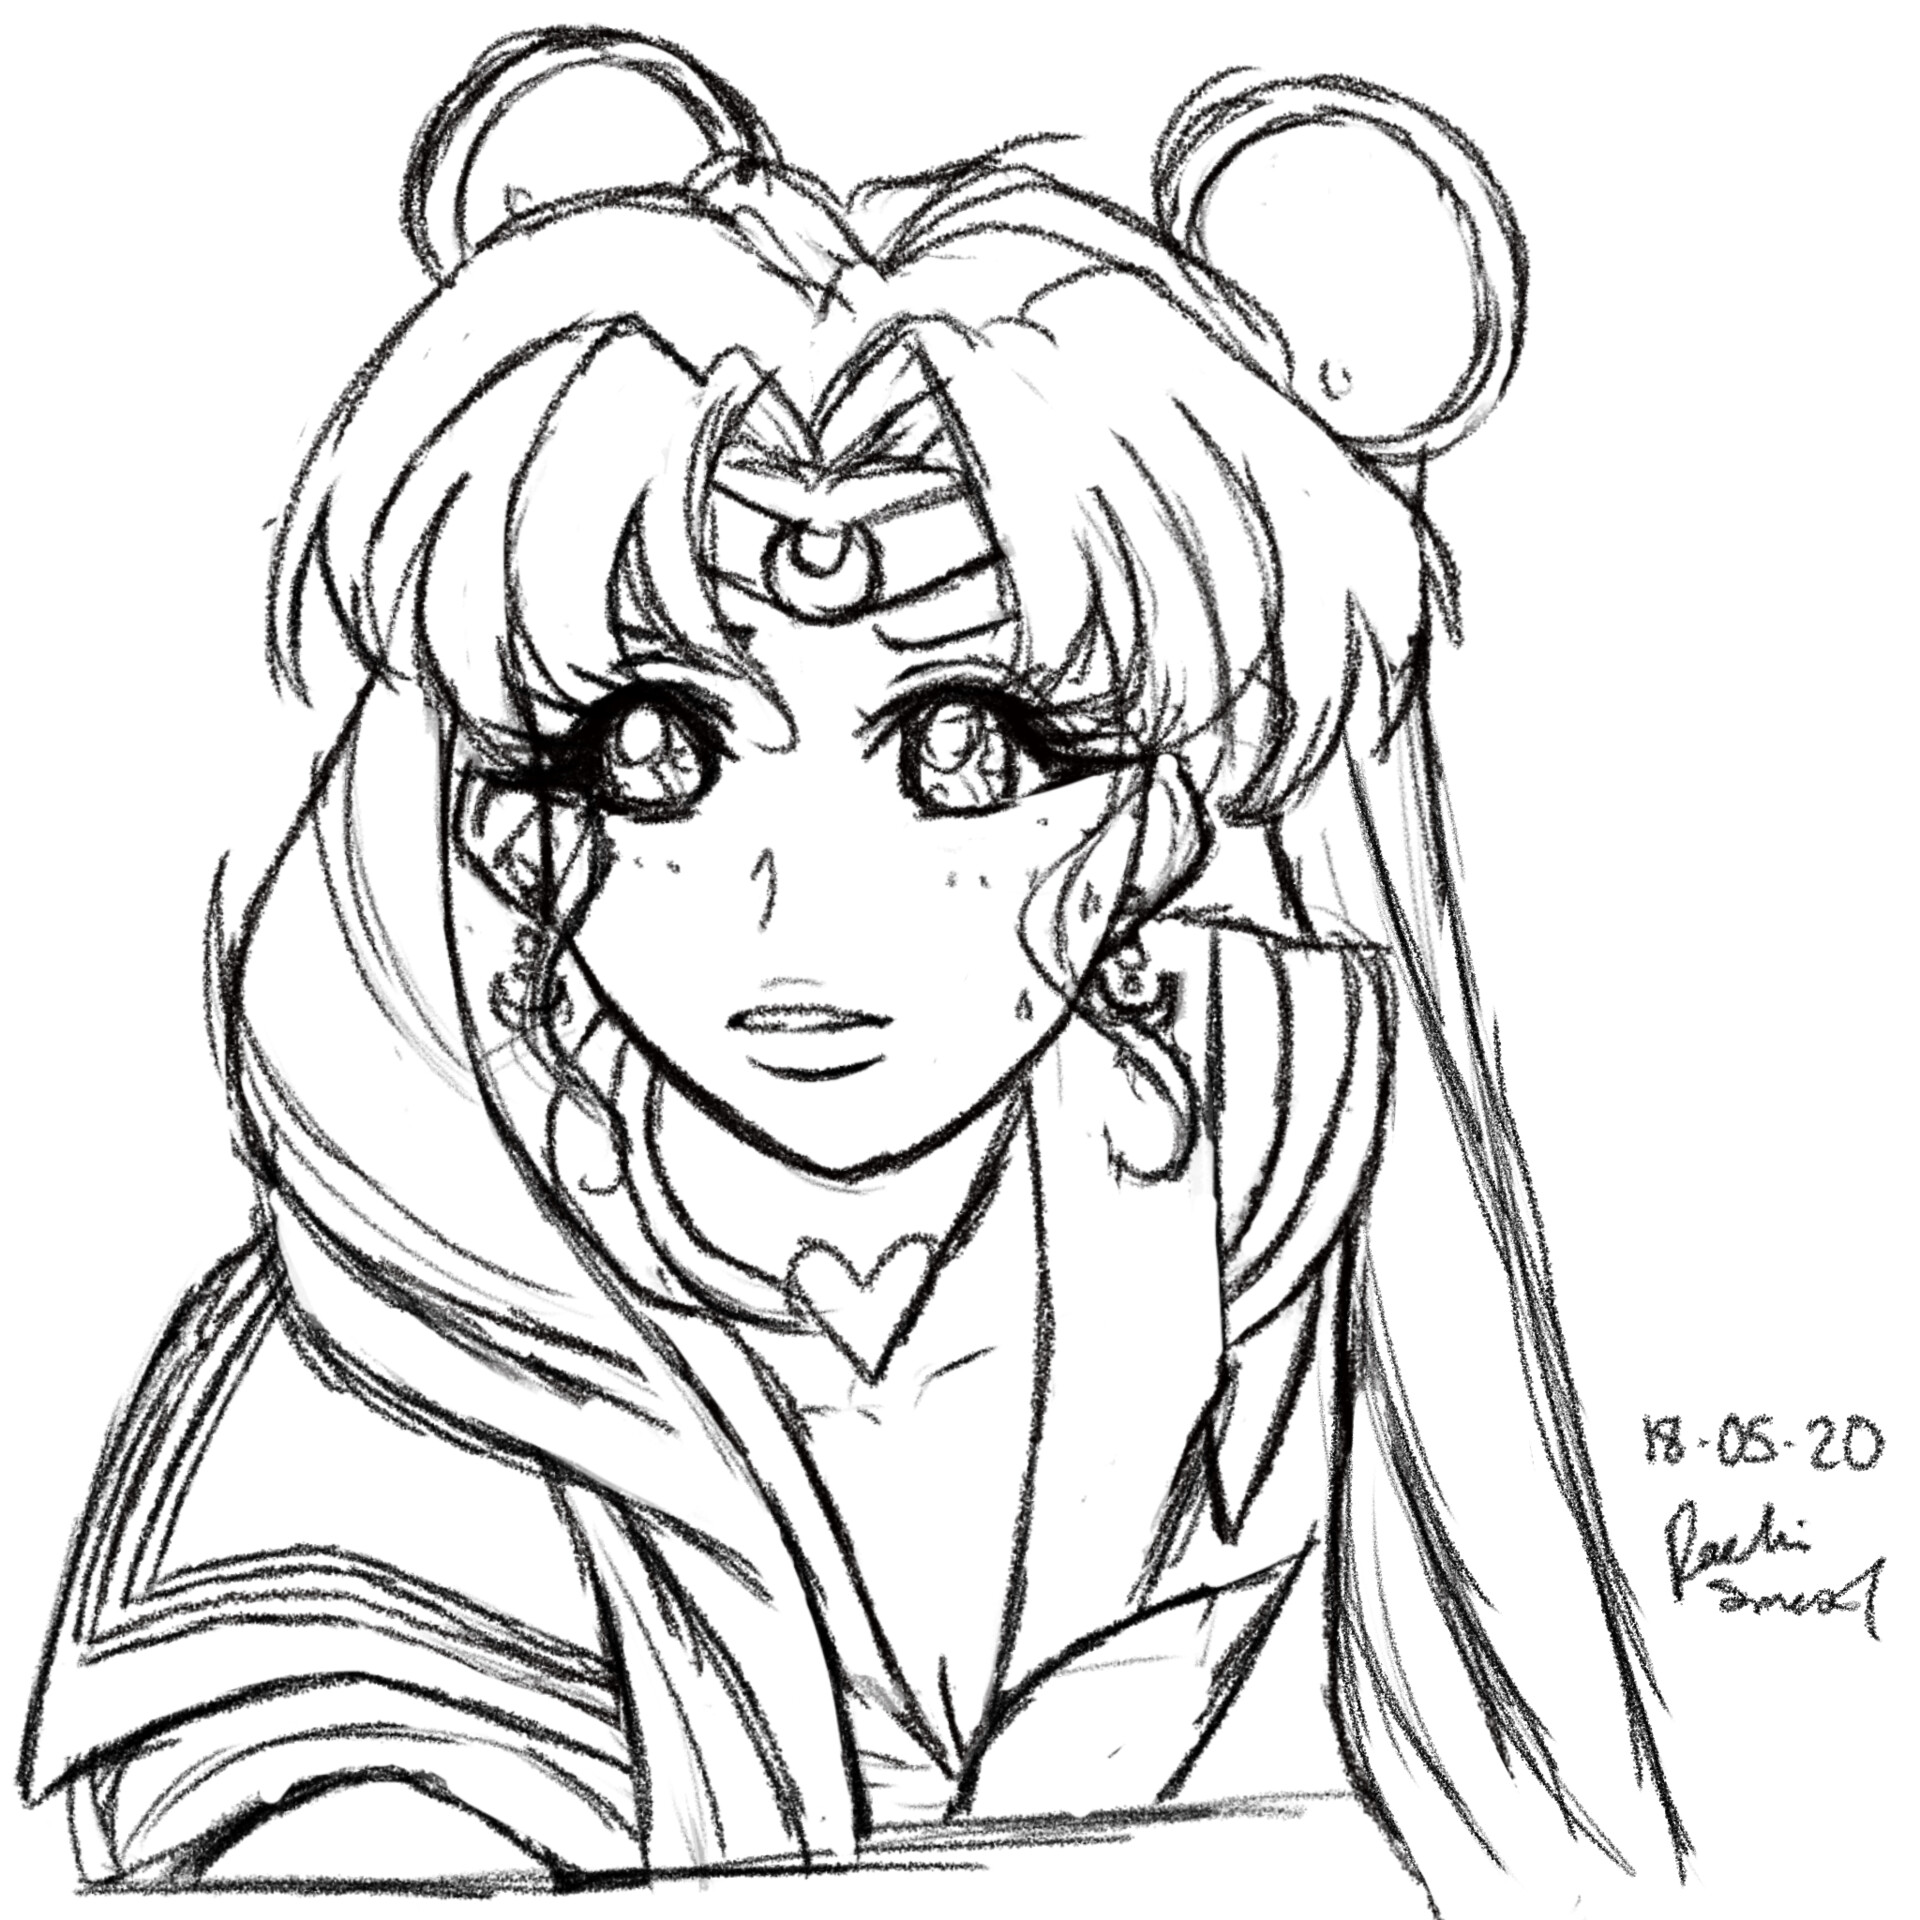 ArtStation - Sailor Moon Sketch